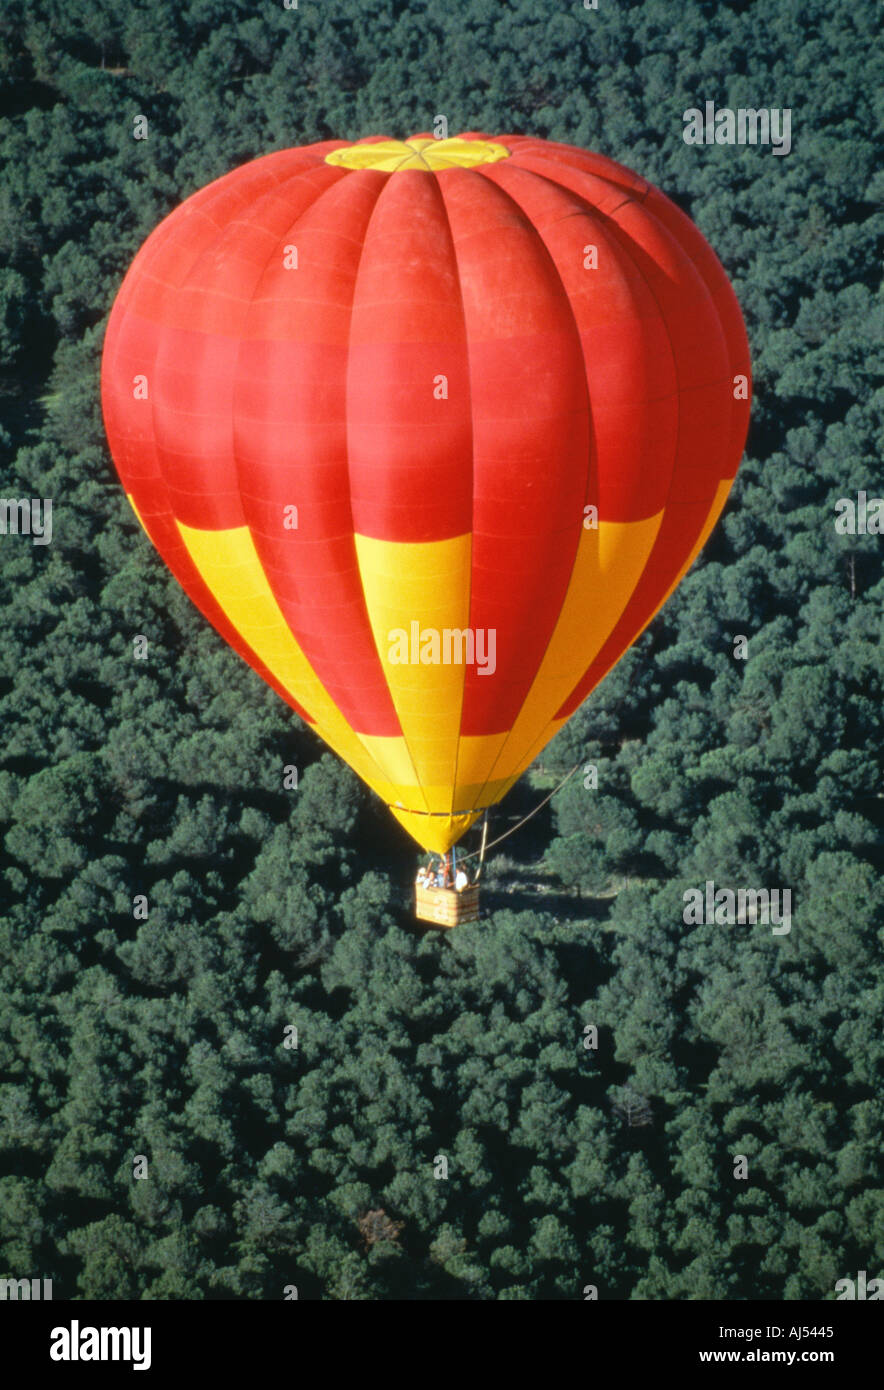 Hot Air Balloon flying over forest liberté Droit de voyage voyage voyage nature paysage Banque D'Images